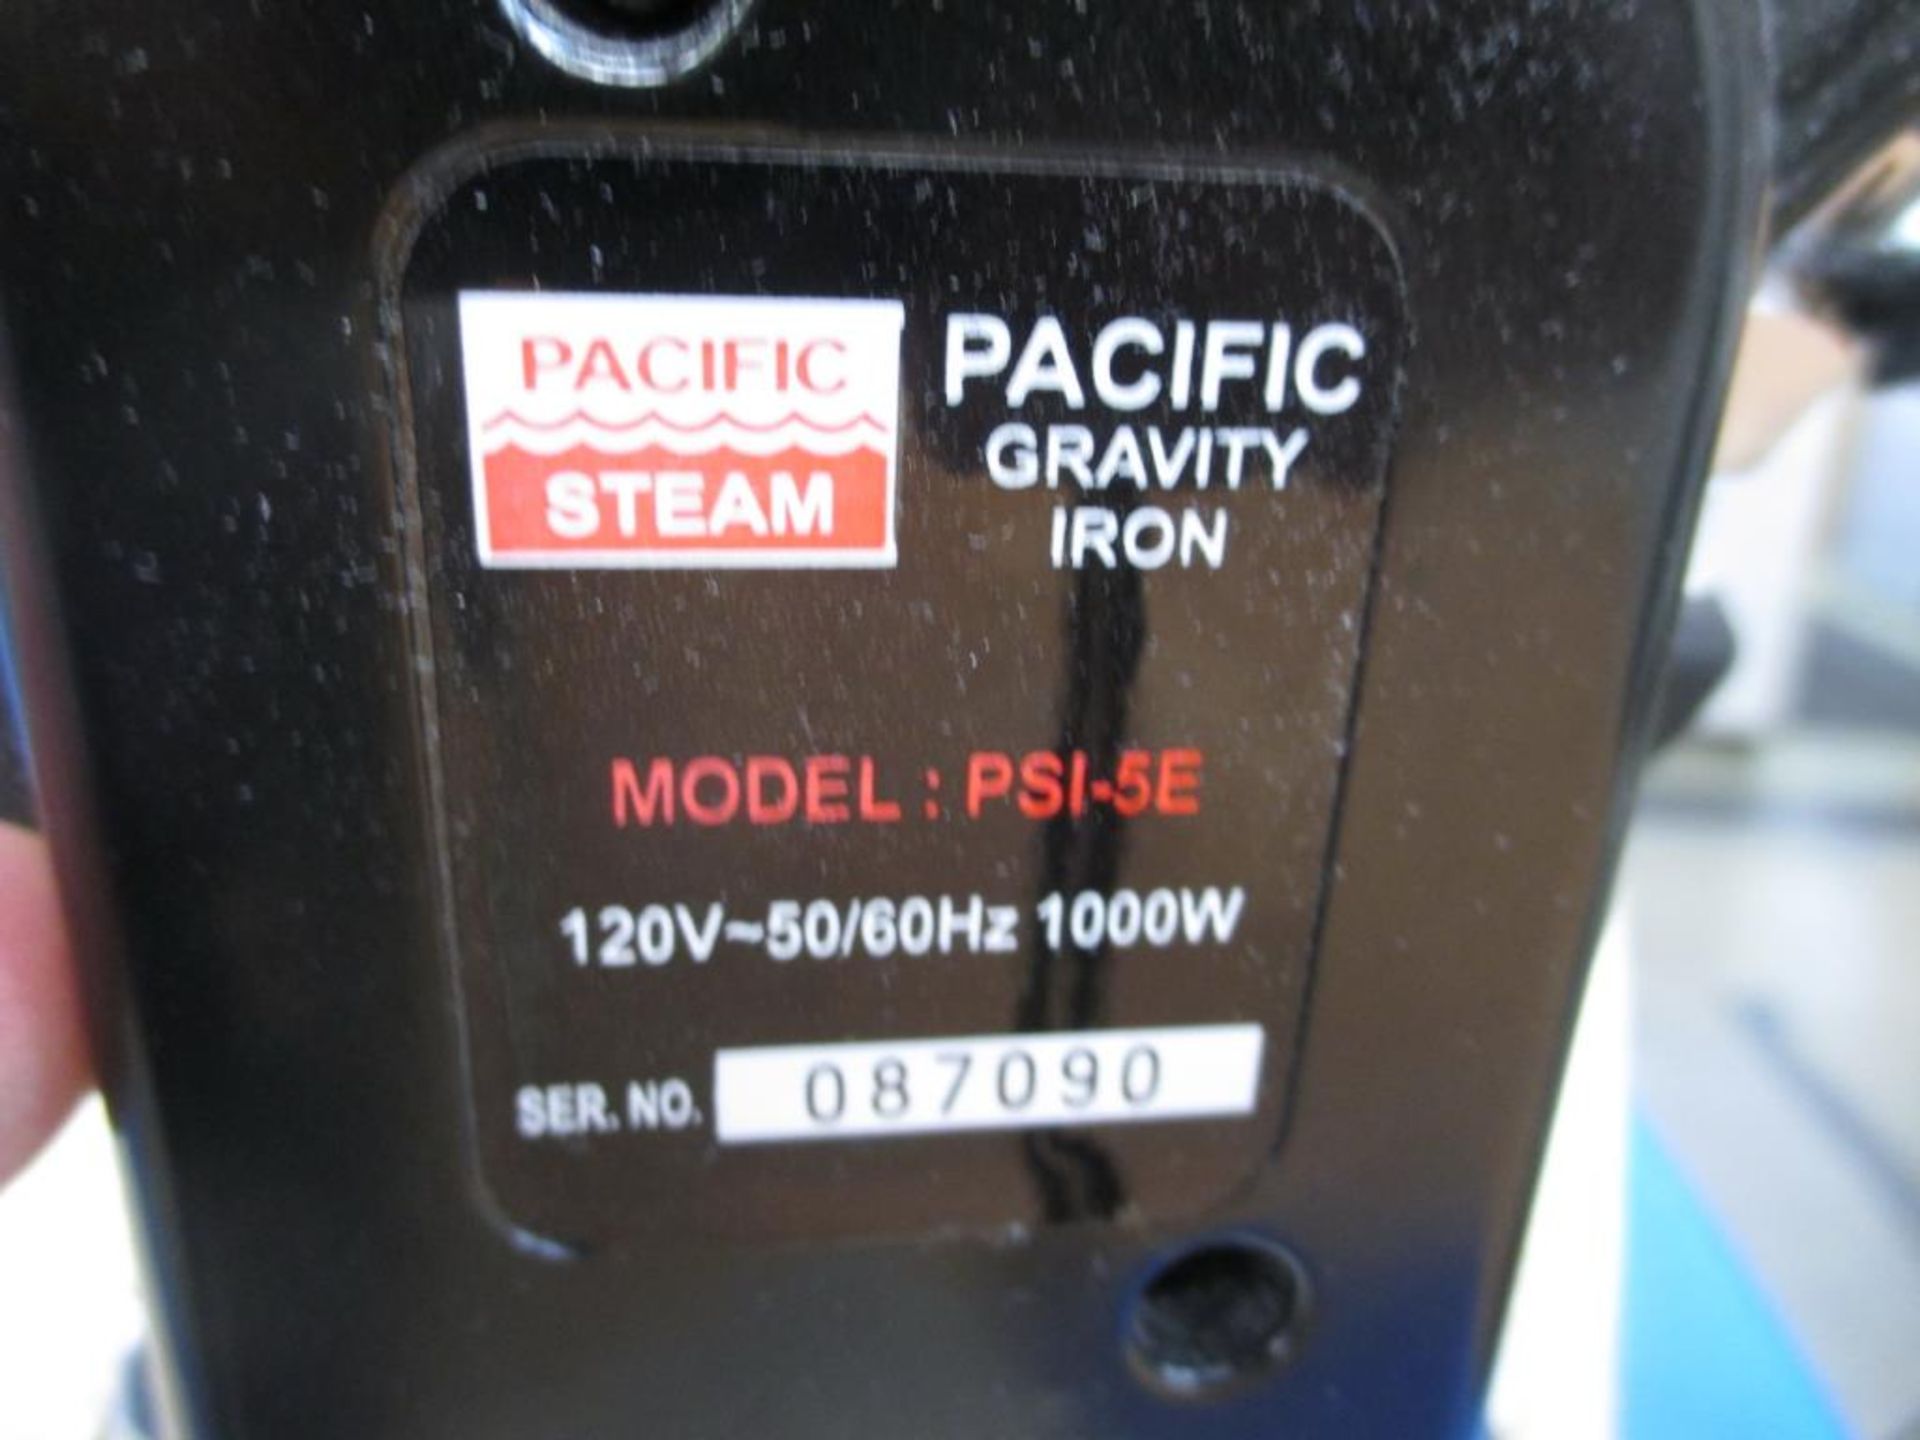 Iron Press Board. Vaporpress 522000002 Iron Press Board with Pacific Steam model PSE-5E Iron. SN# - Image 5 of 6